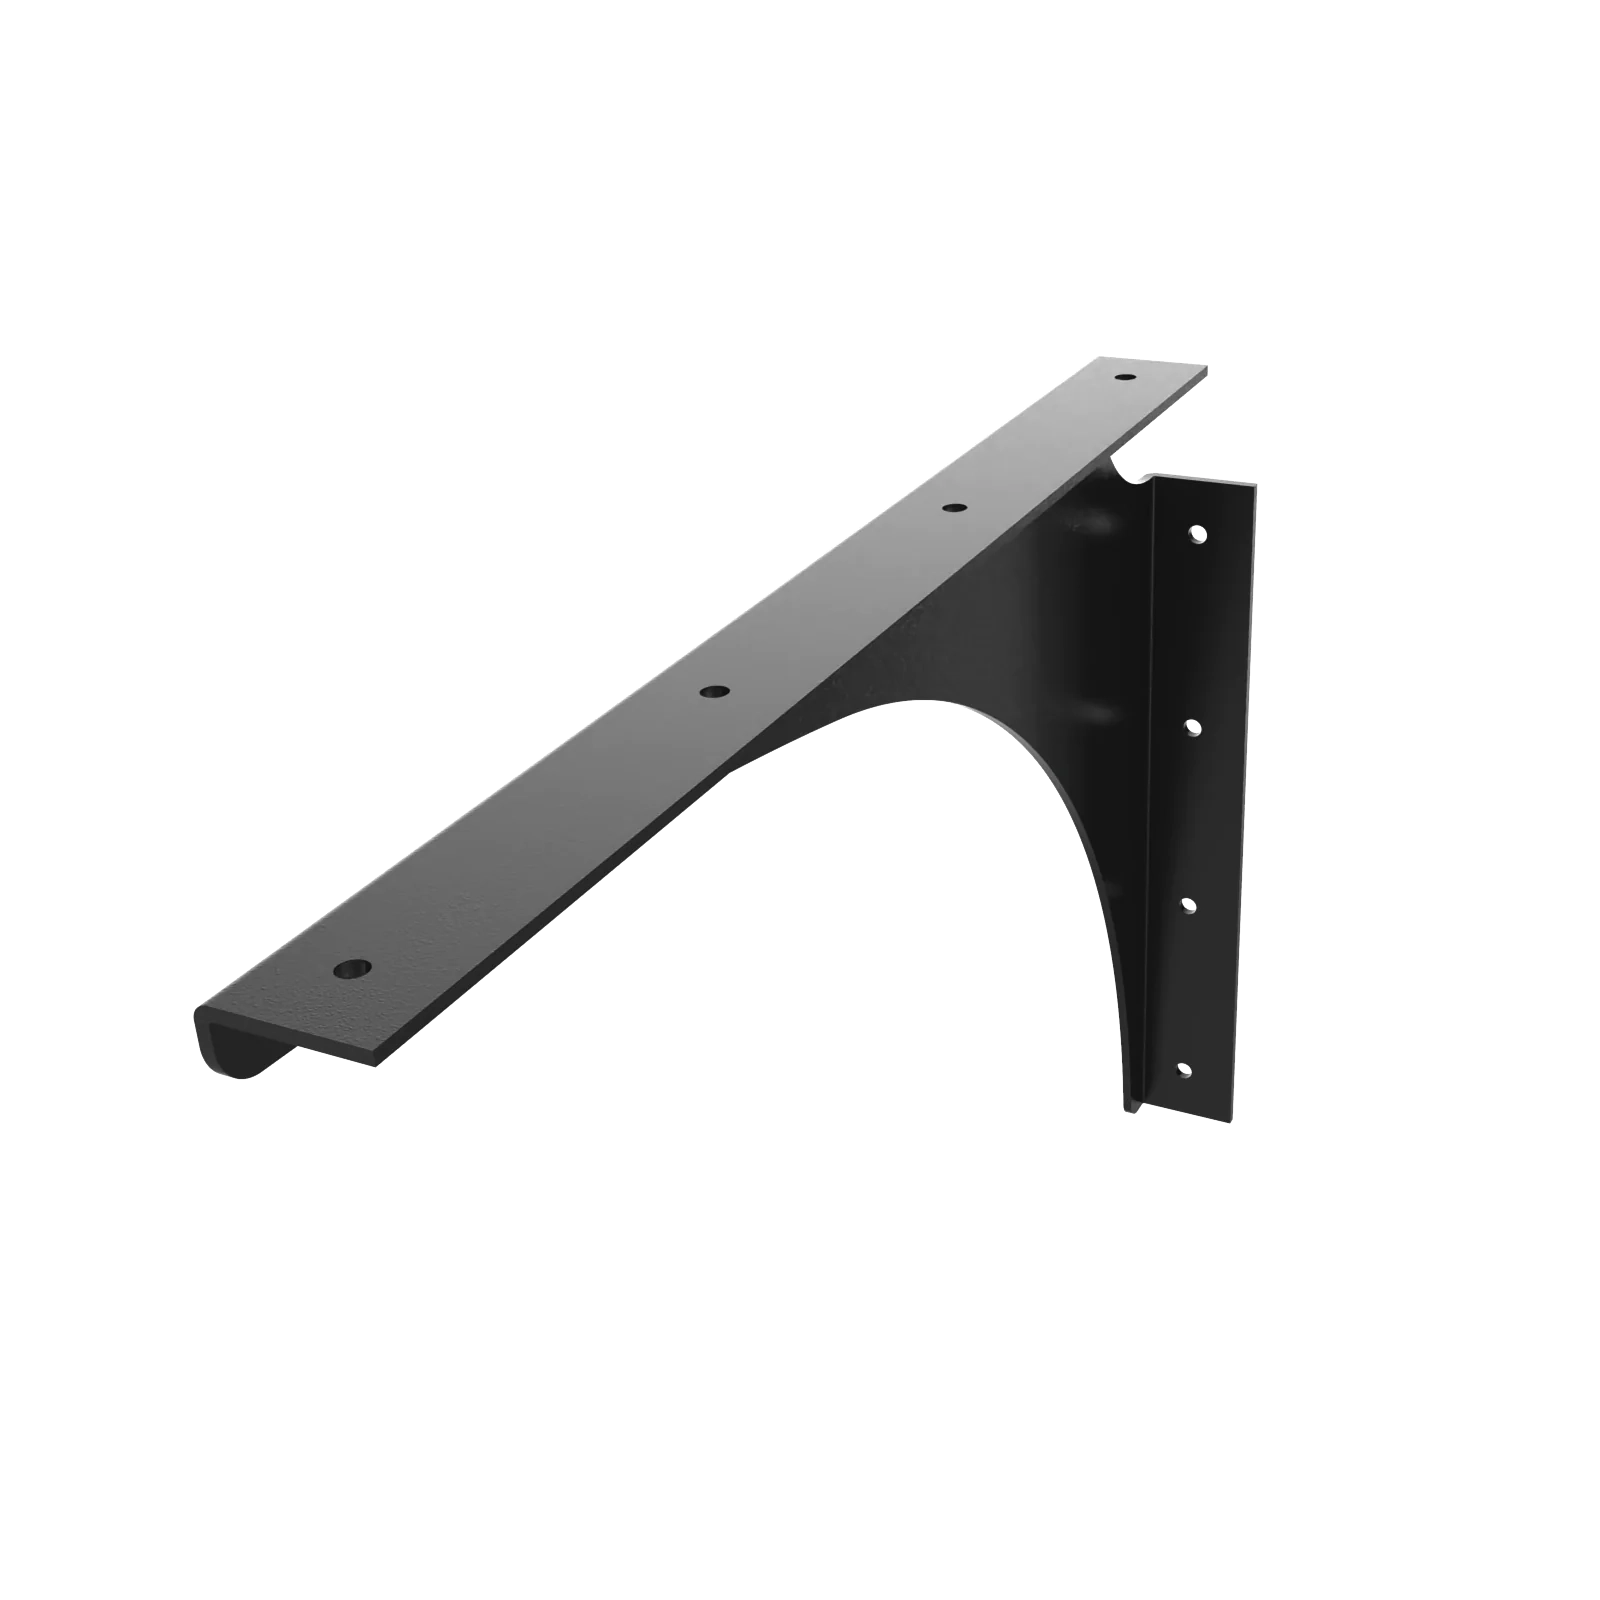 Black Universal Commercial Bracket - Ideal for vanities, shelves, desks, and more.